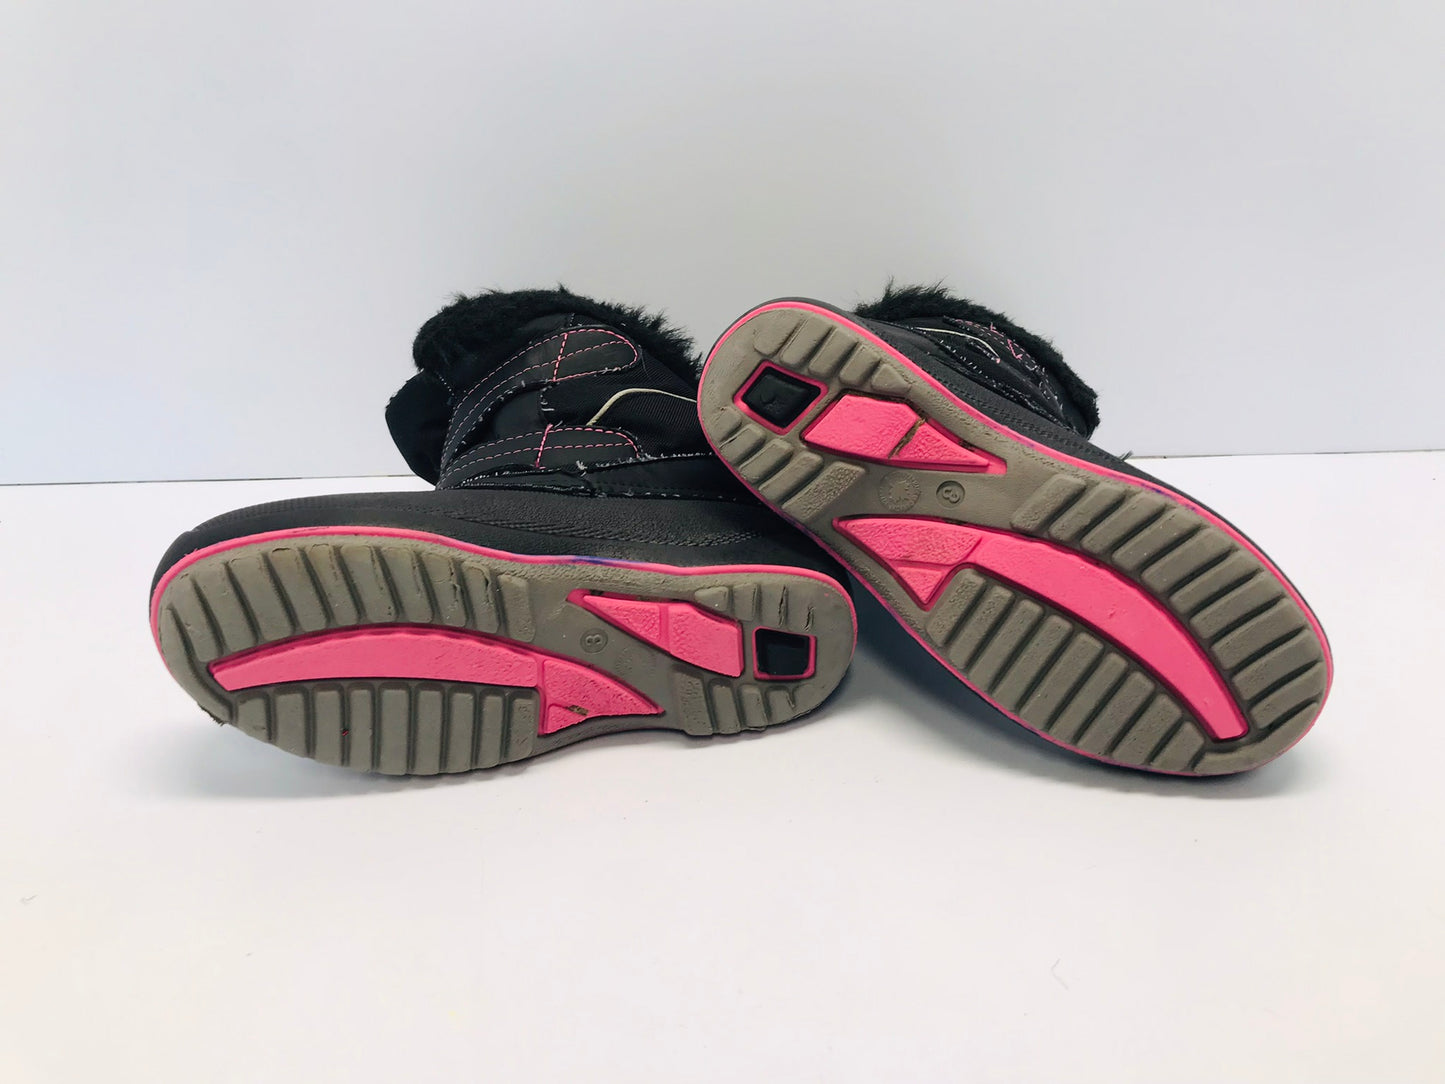 Winter Boots Child Size 3 Maple Leaf Black Pink